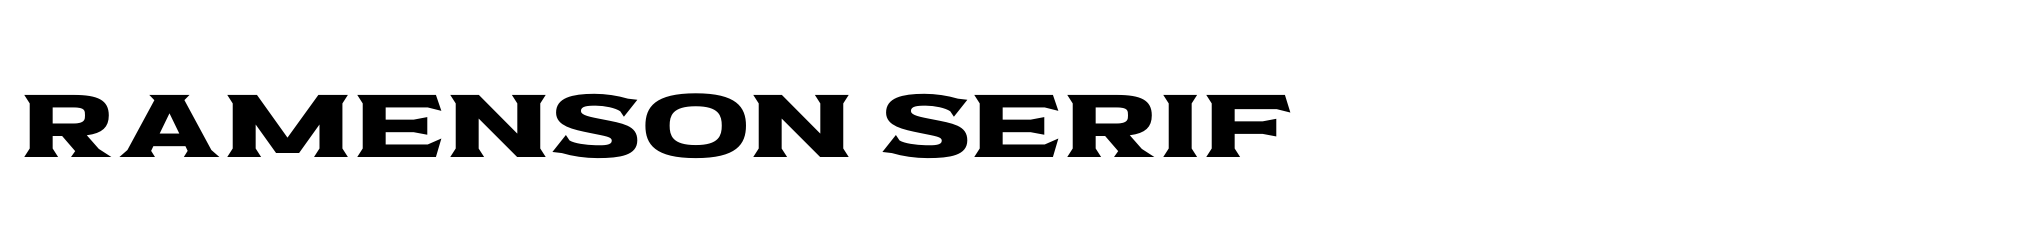 Ramenson Serif image